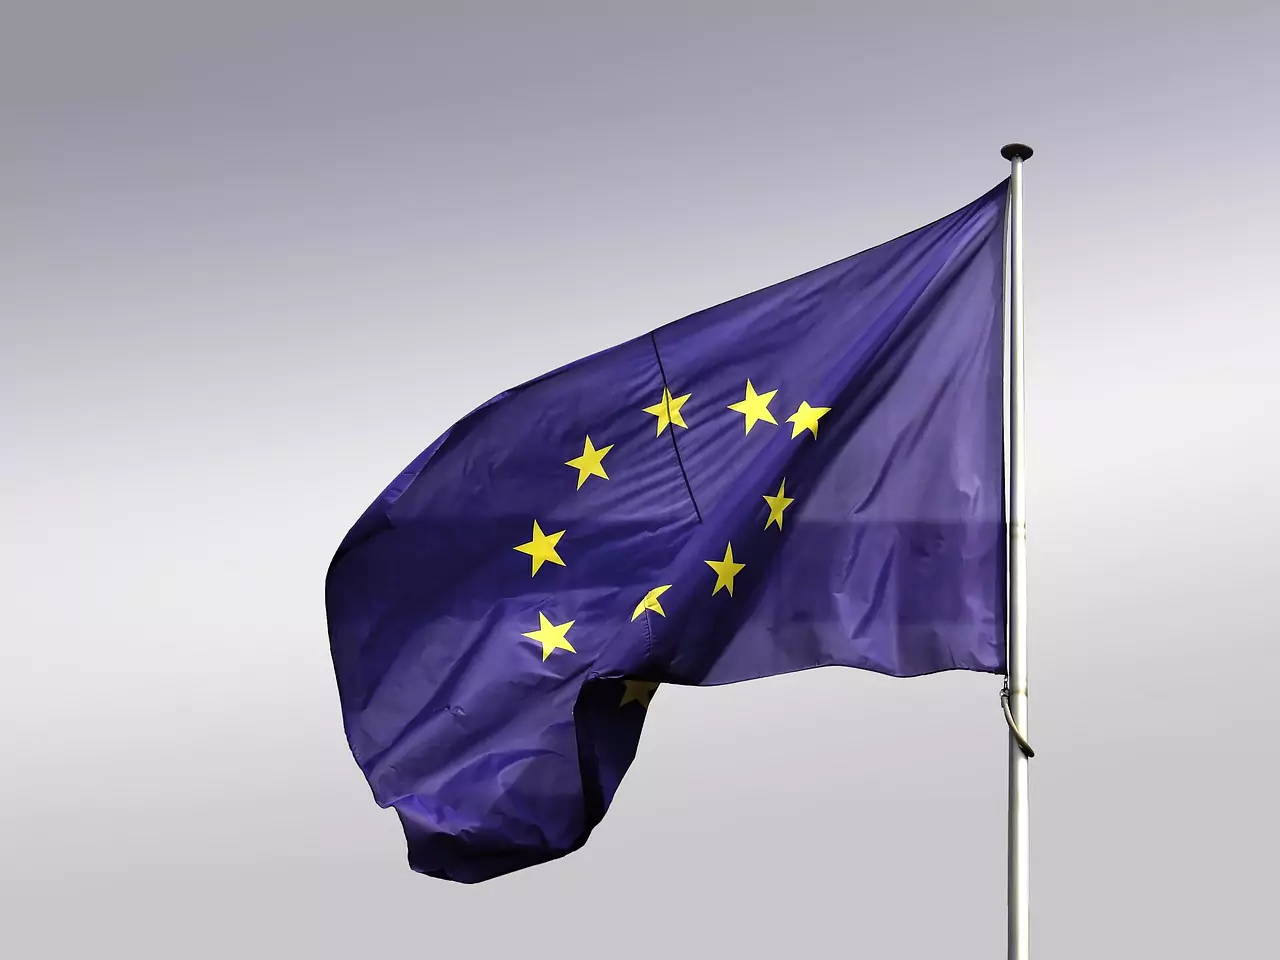 EU plastic use symbol photo with flag